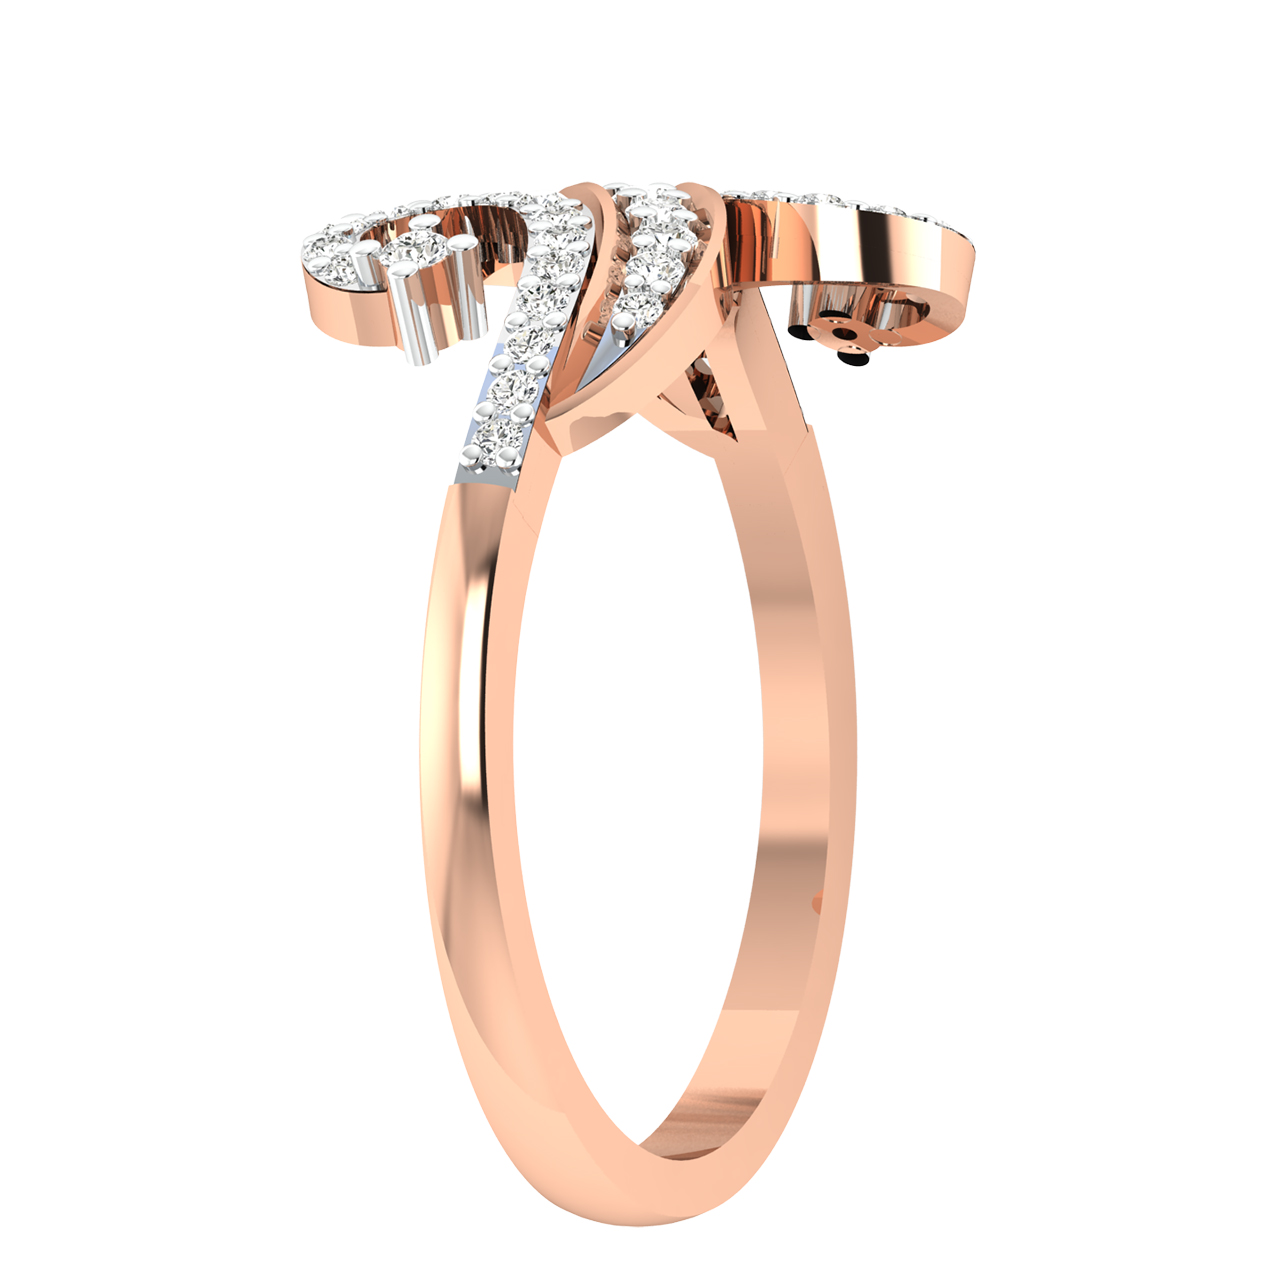 Emica Diamond Engagement Ring